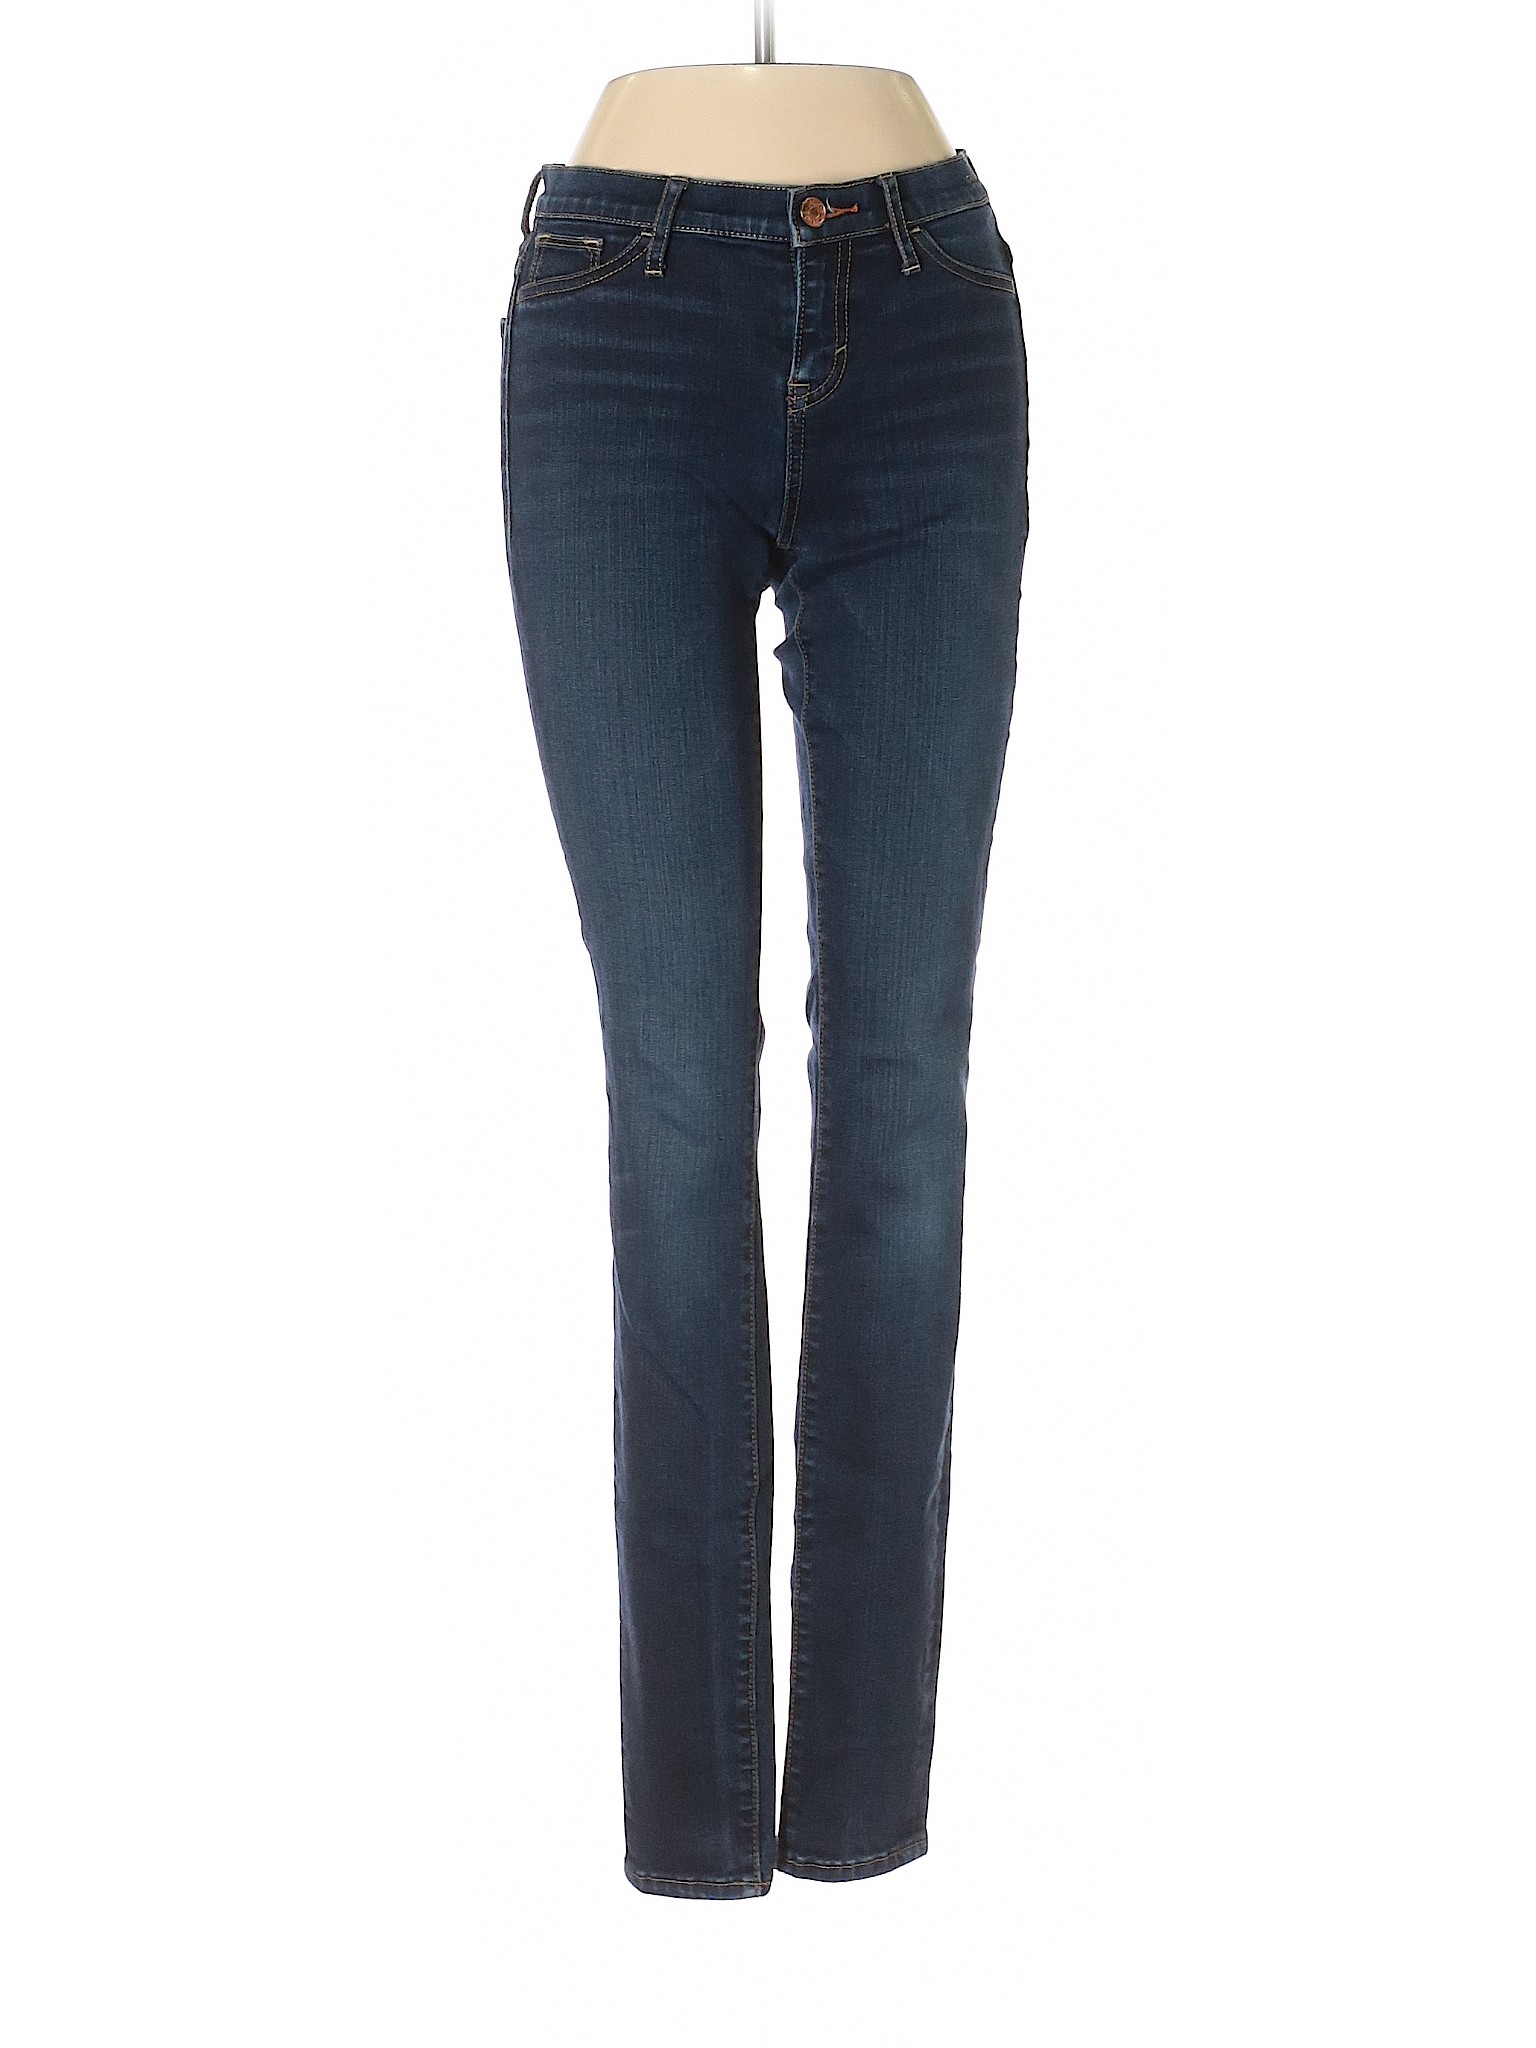 Dittos Women Blue Jeans 25W | eBay